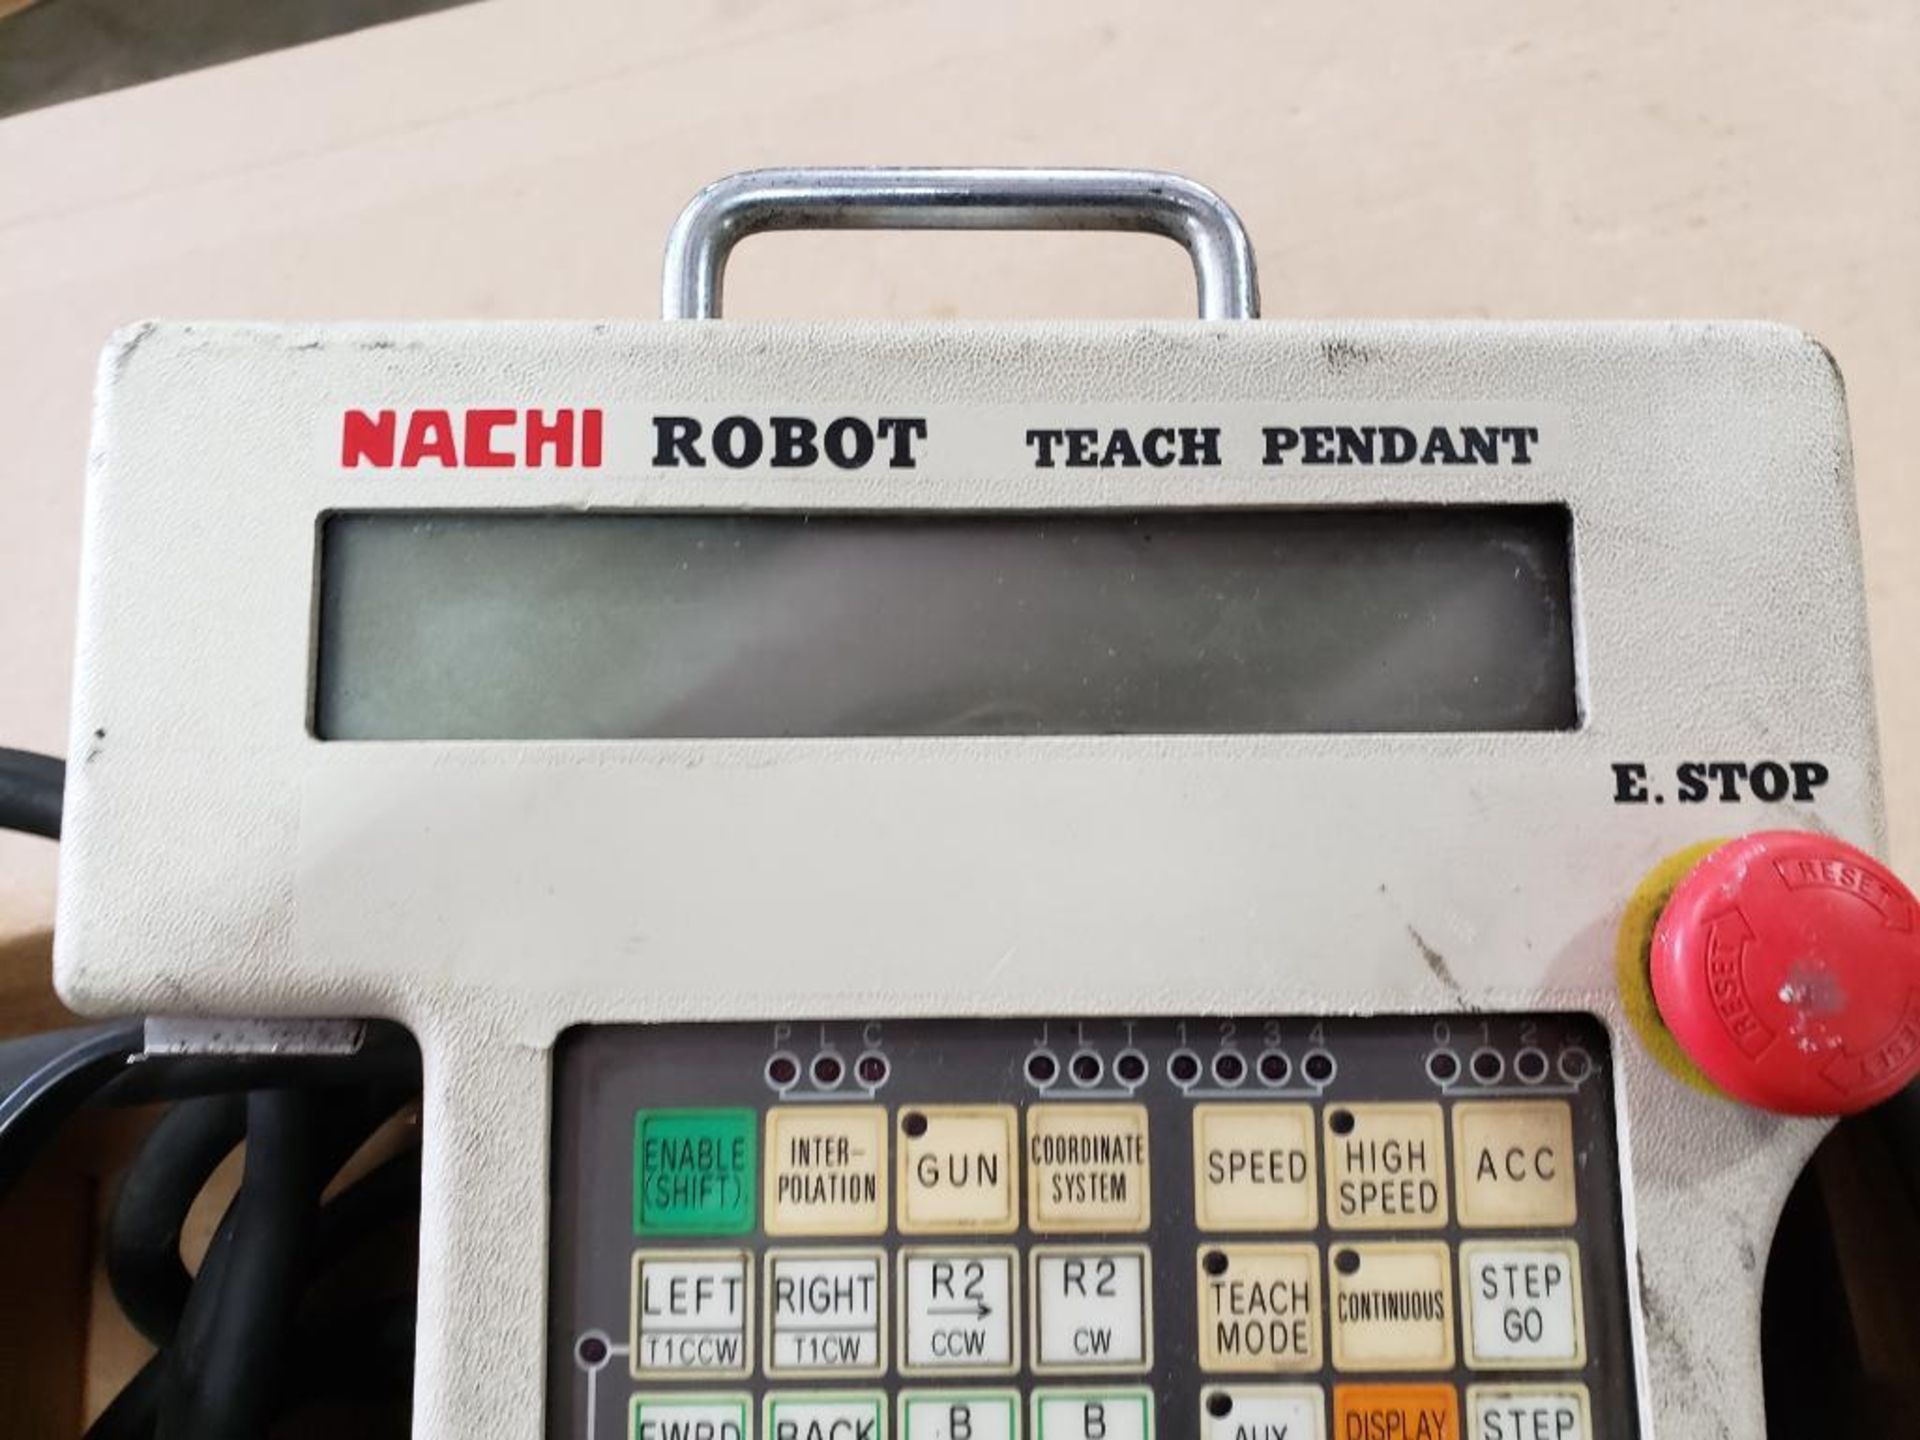 Nachi robot teach pendant RTC301. - Image 3 of 5